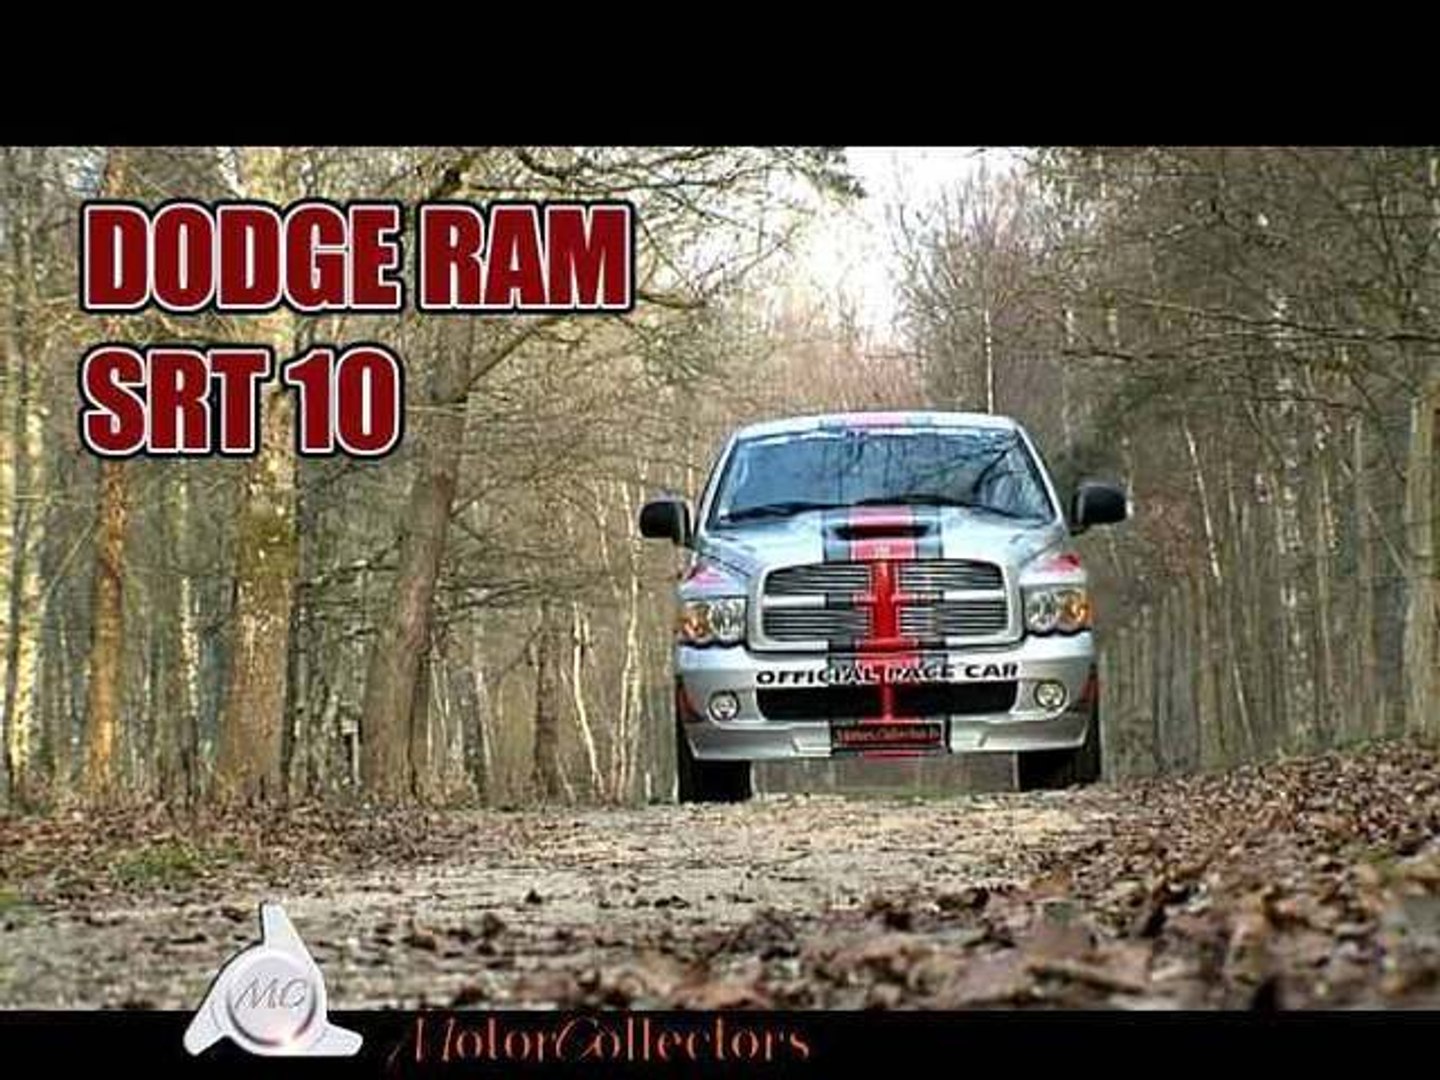 Essai du Dodge RAM SRT10 - Vidéo Dailymotion